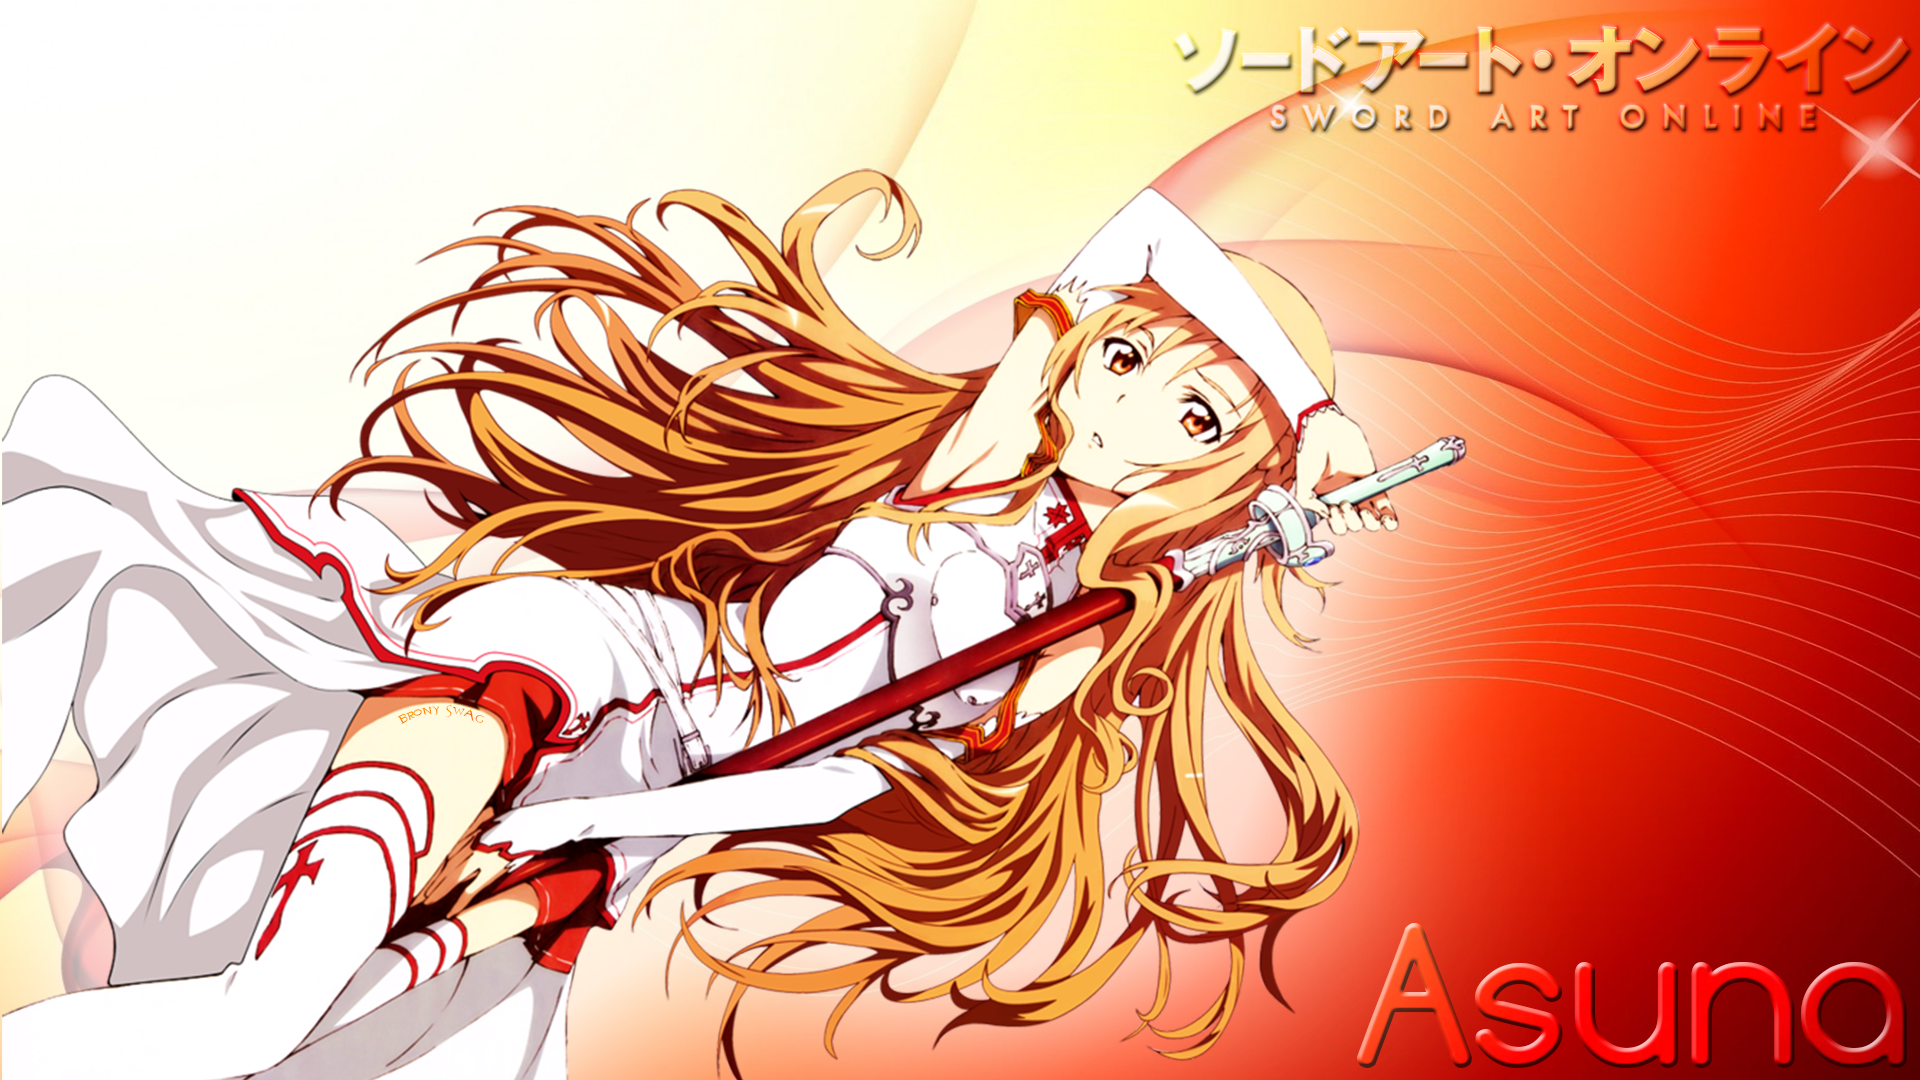 48+ Sword Art Online Asuna Wallpaper on WallpaperSafari